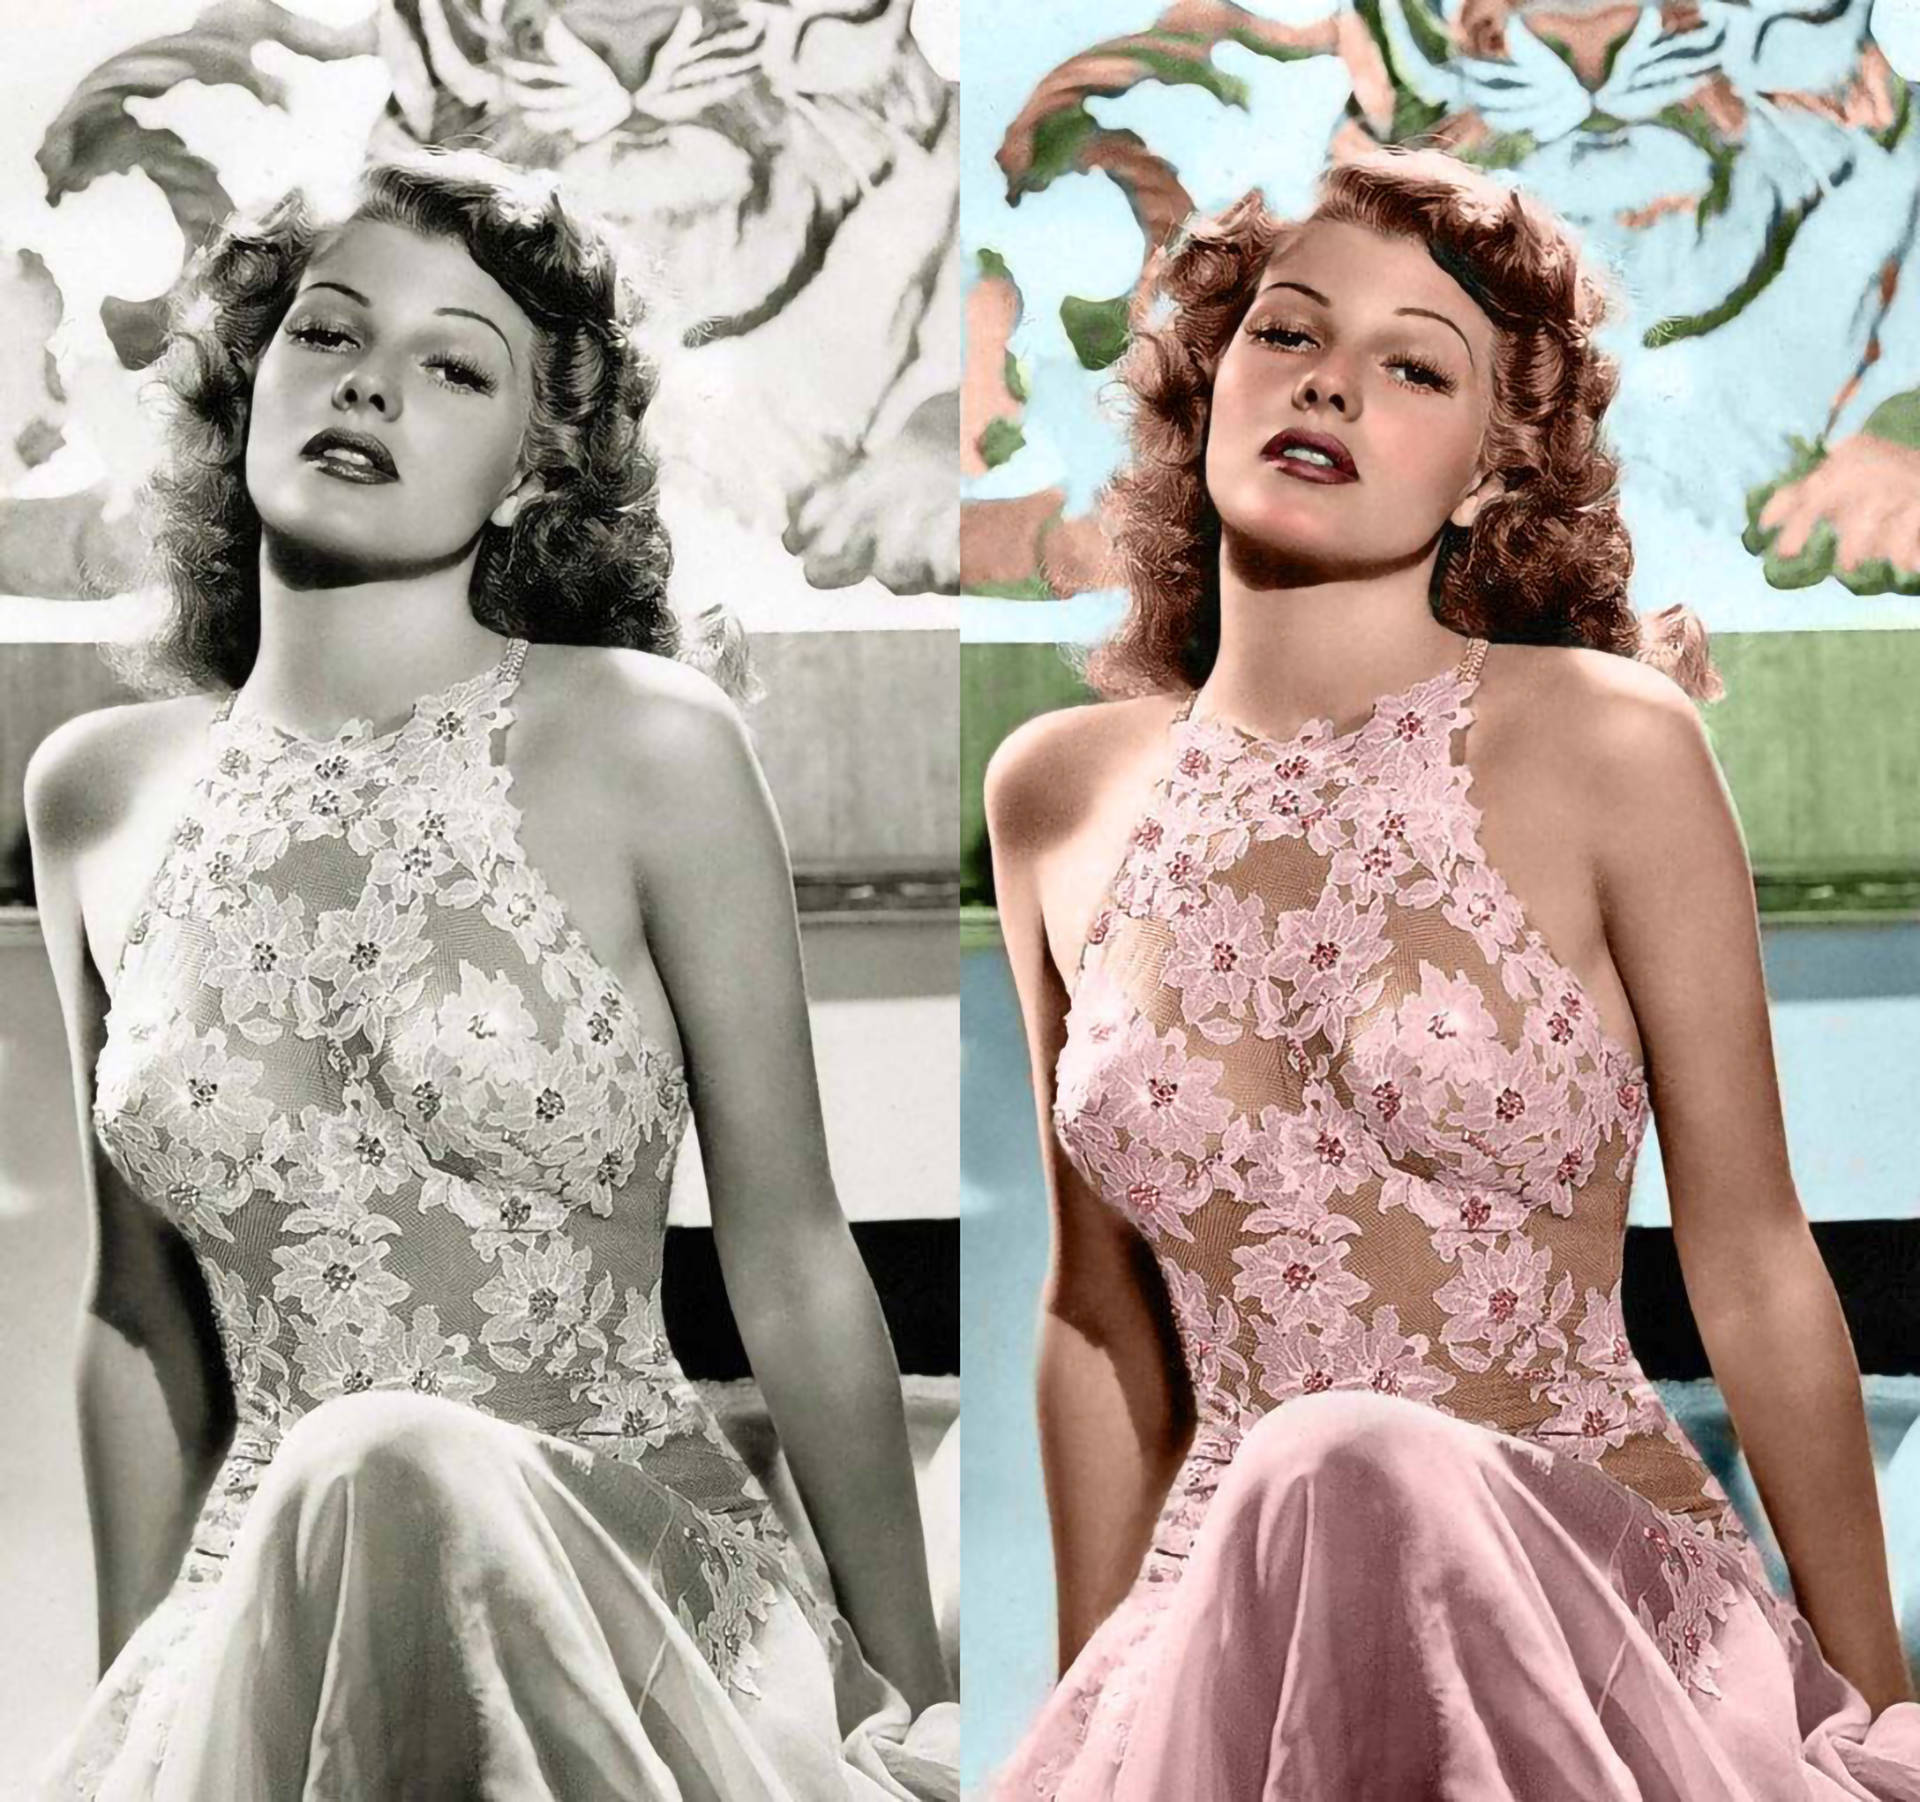 Rita Hayworth Grayscale And Color Wallpaper